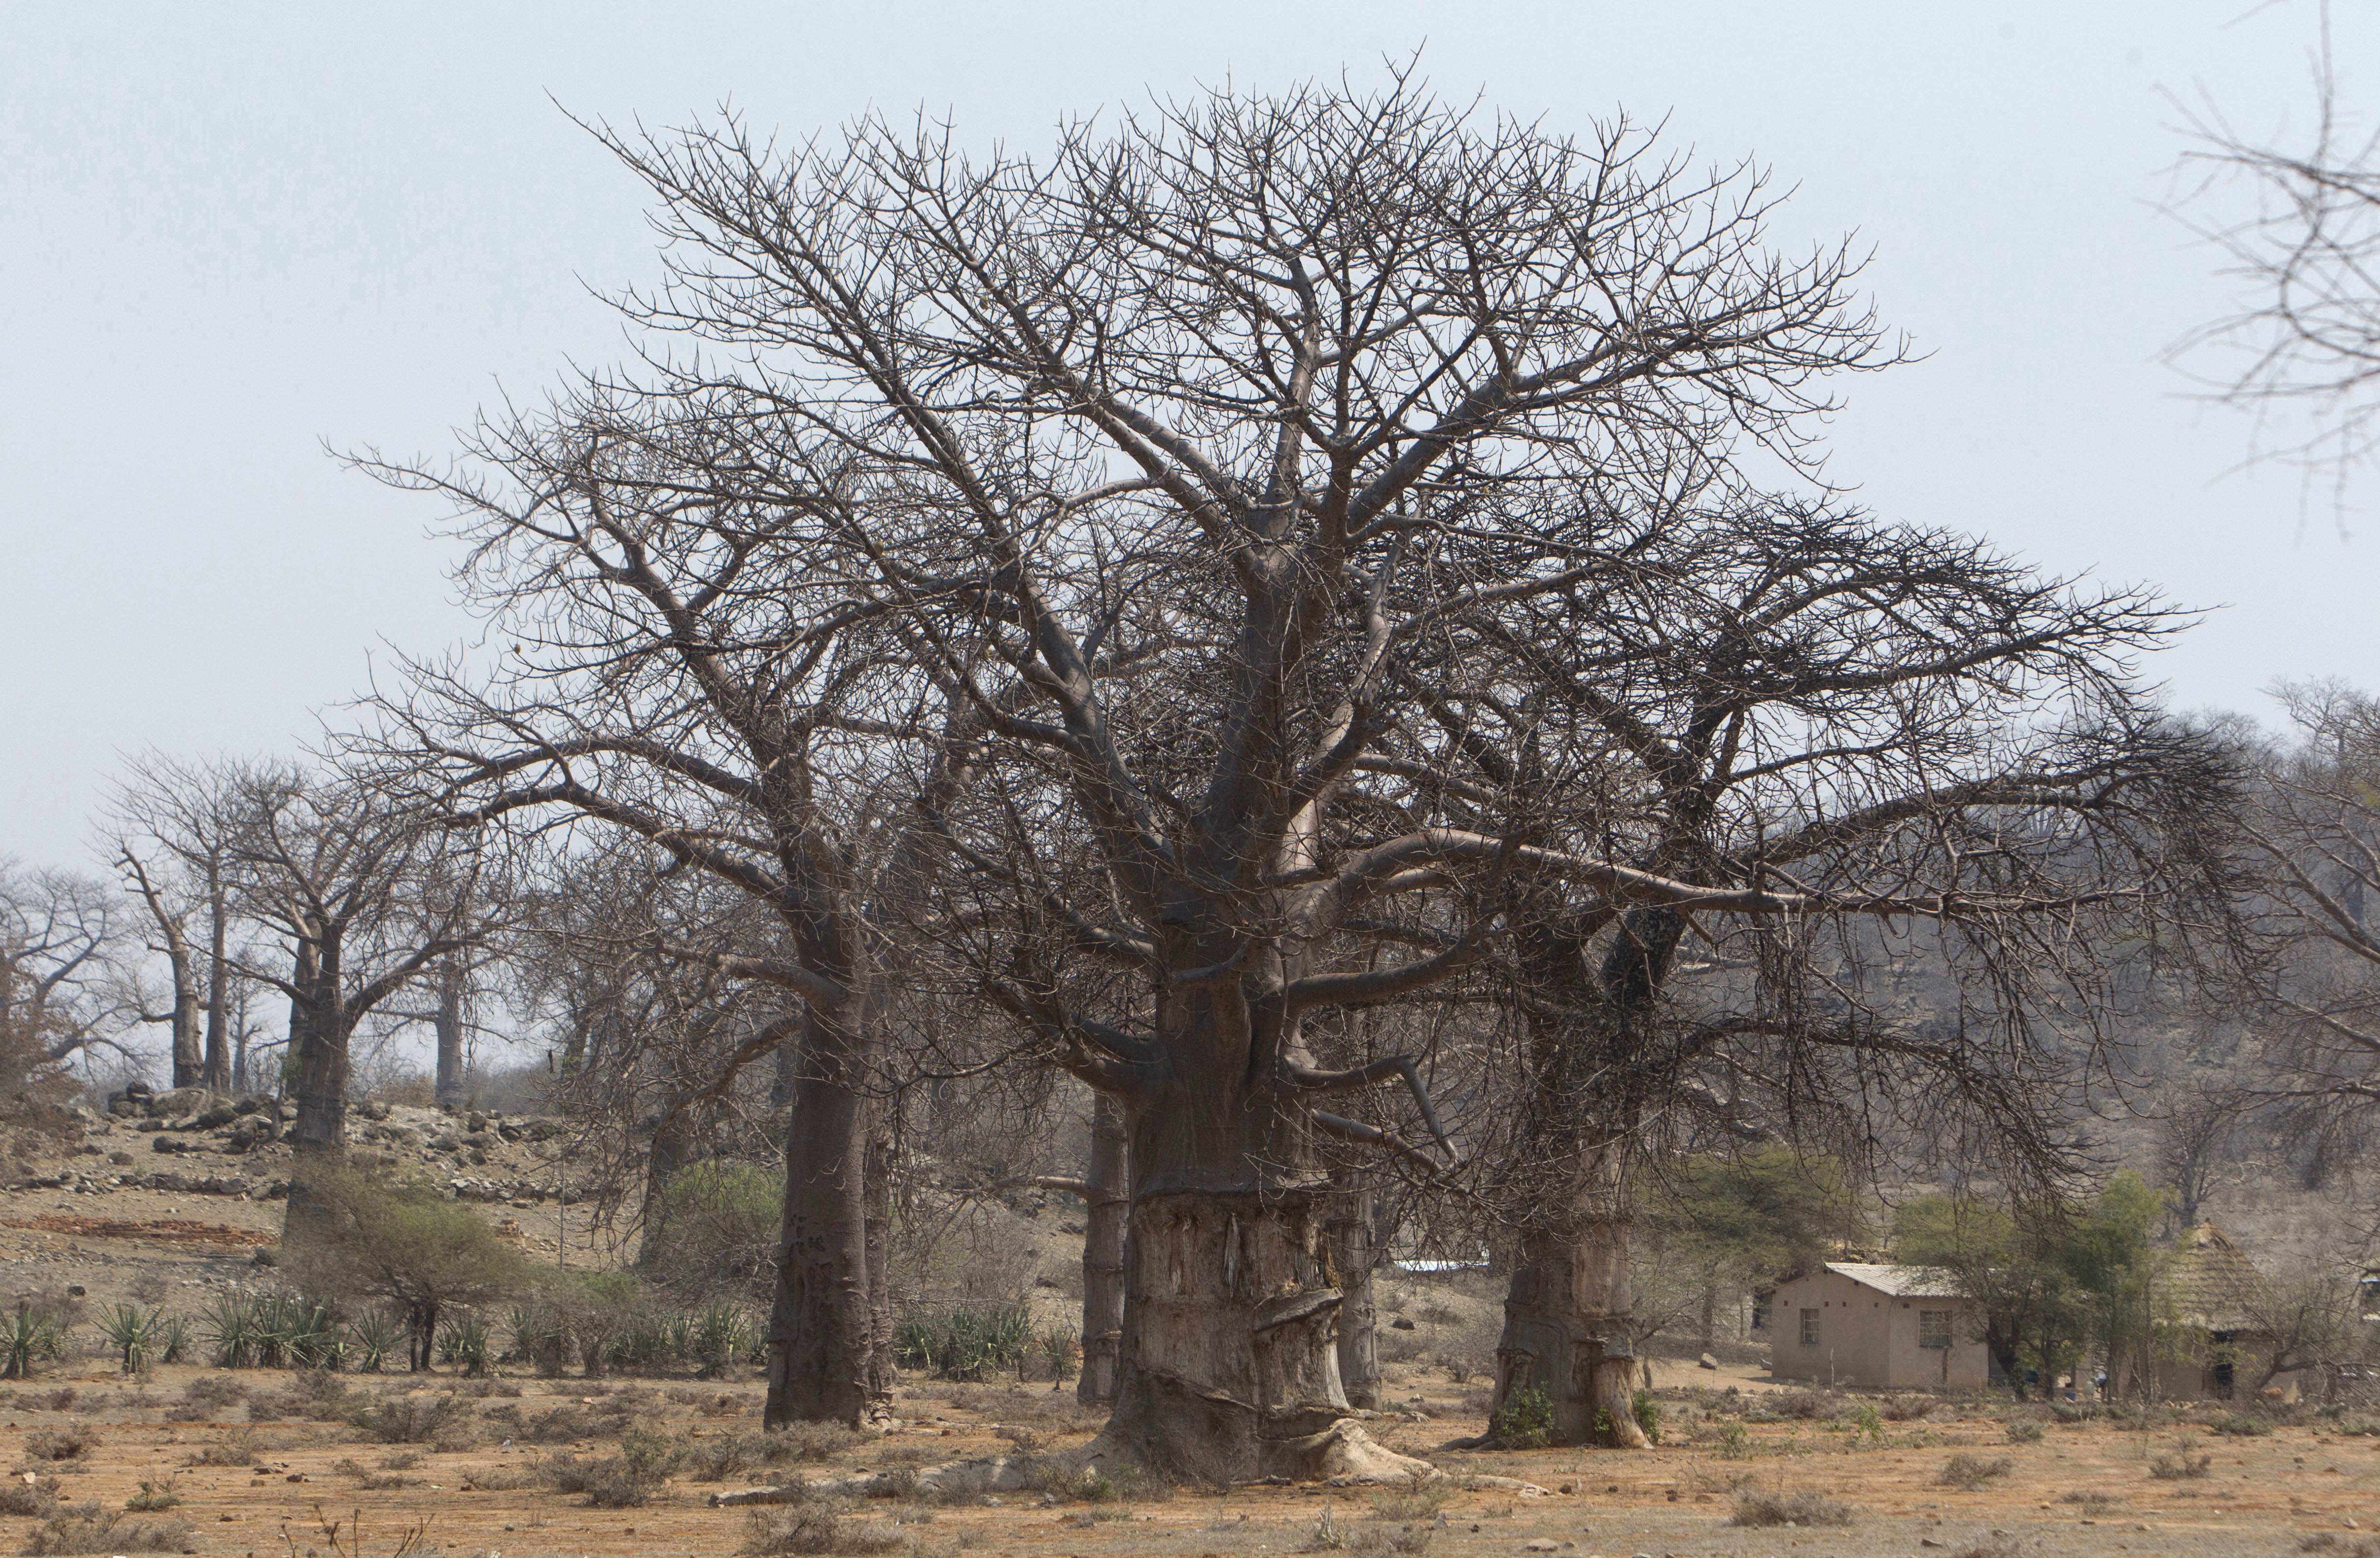 Baobab trees in a field in Chimanimani, Zimbabwe